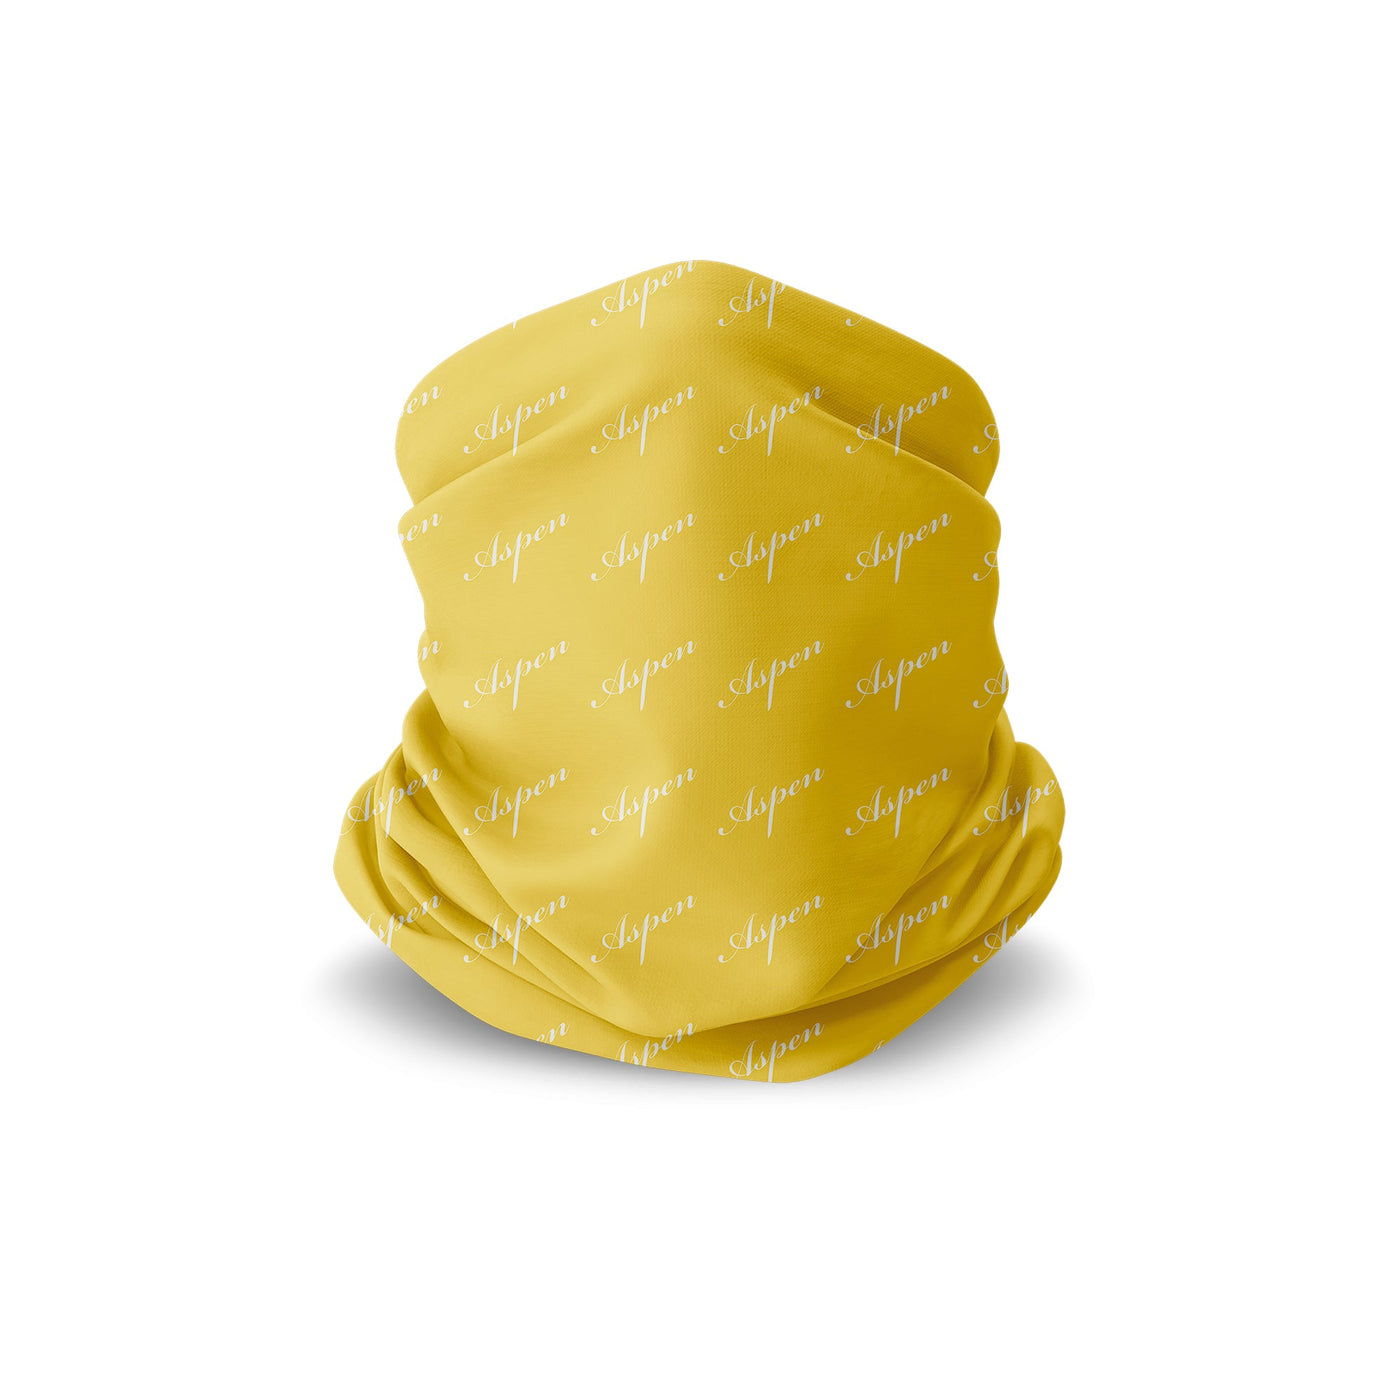 Neck Gaiter - For Men Women - Aspen Yellow - Artsy - Headband - Bandana - Wristband - Neck Warmer - Face Shield - Buff - Studio40ParkLane